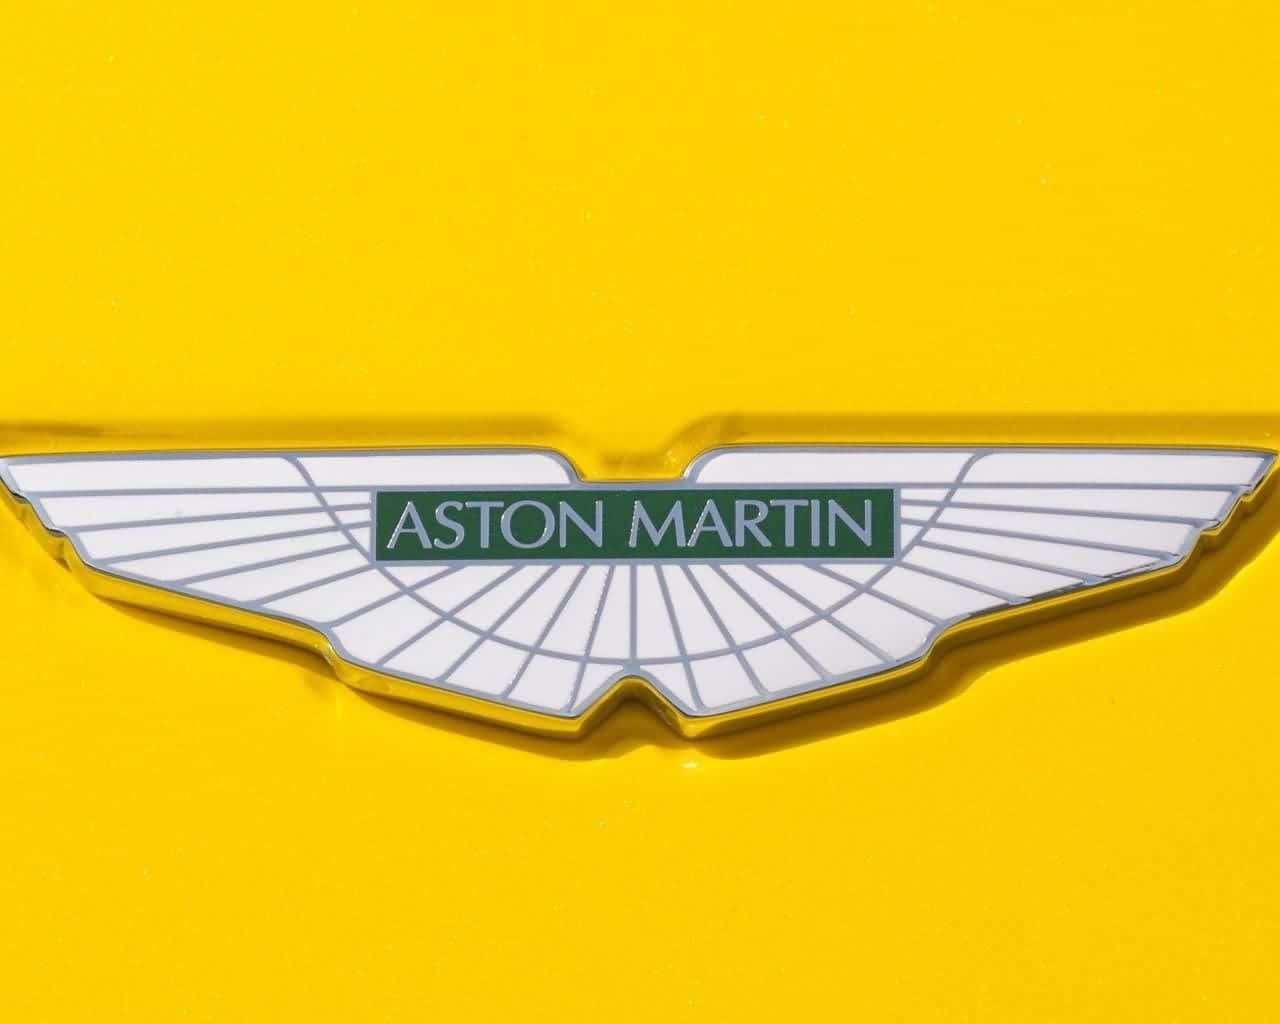 Aston Martin Badge On A Yellow Car